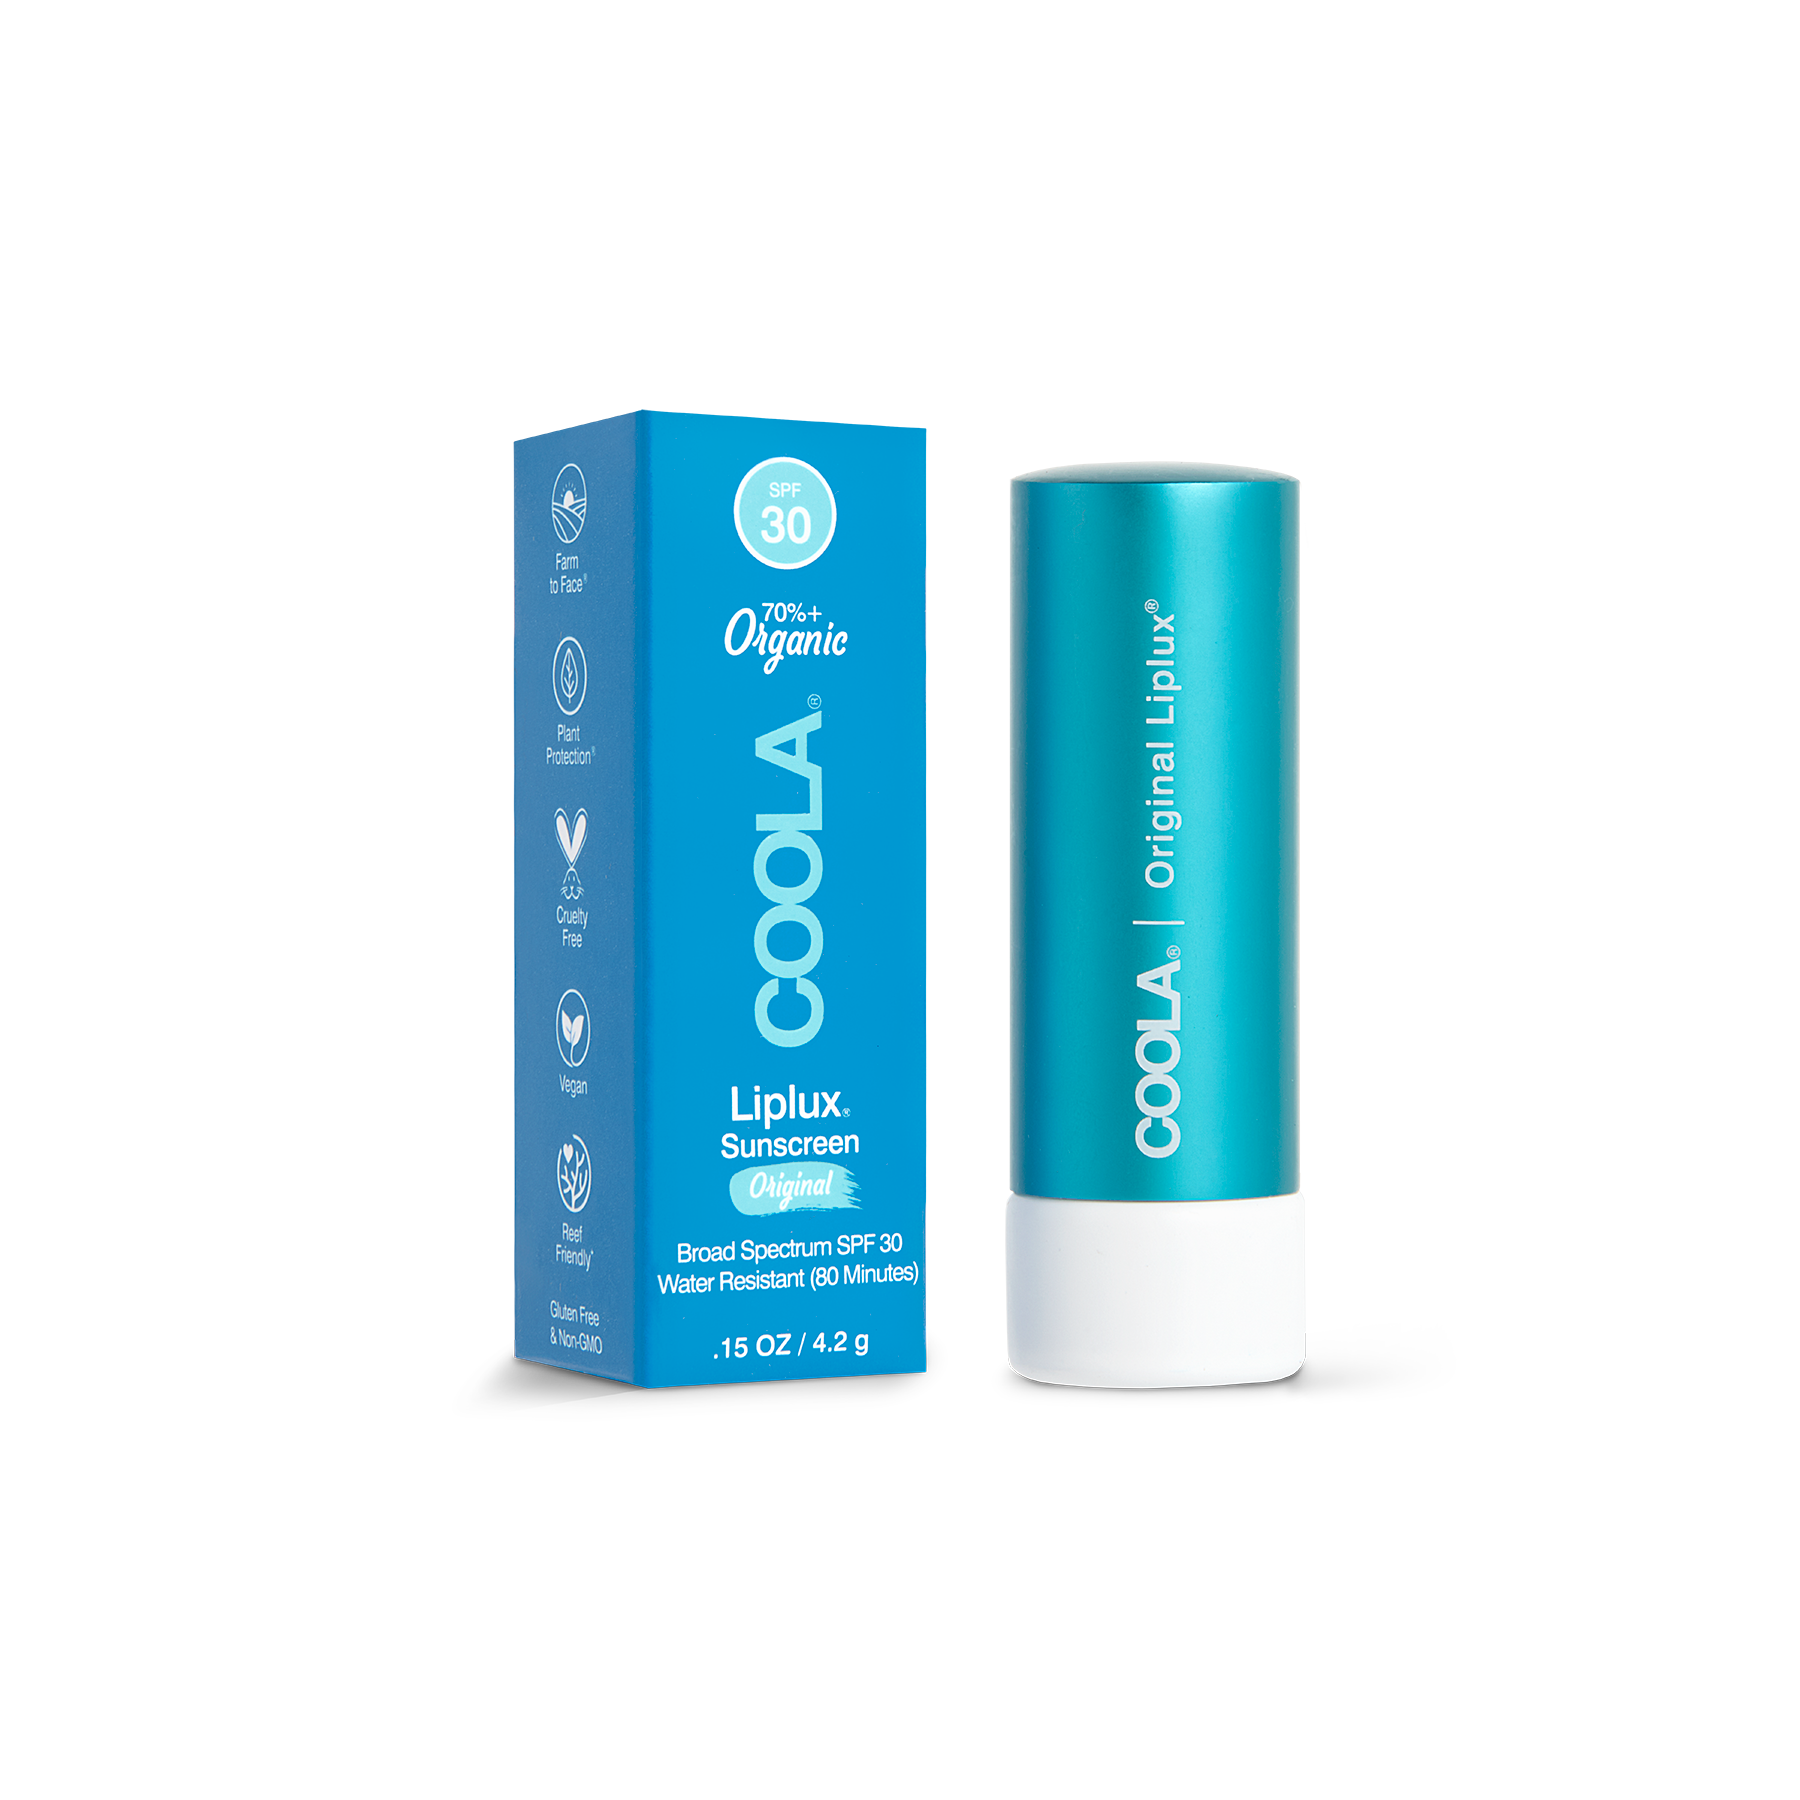 Coola - Liplux Sunscreen - Original SPF 30